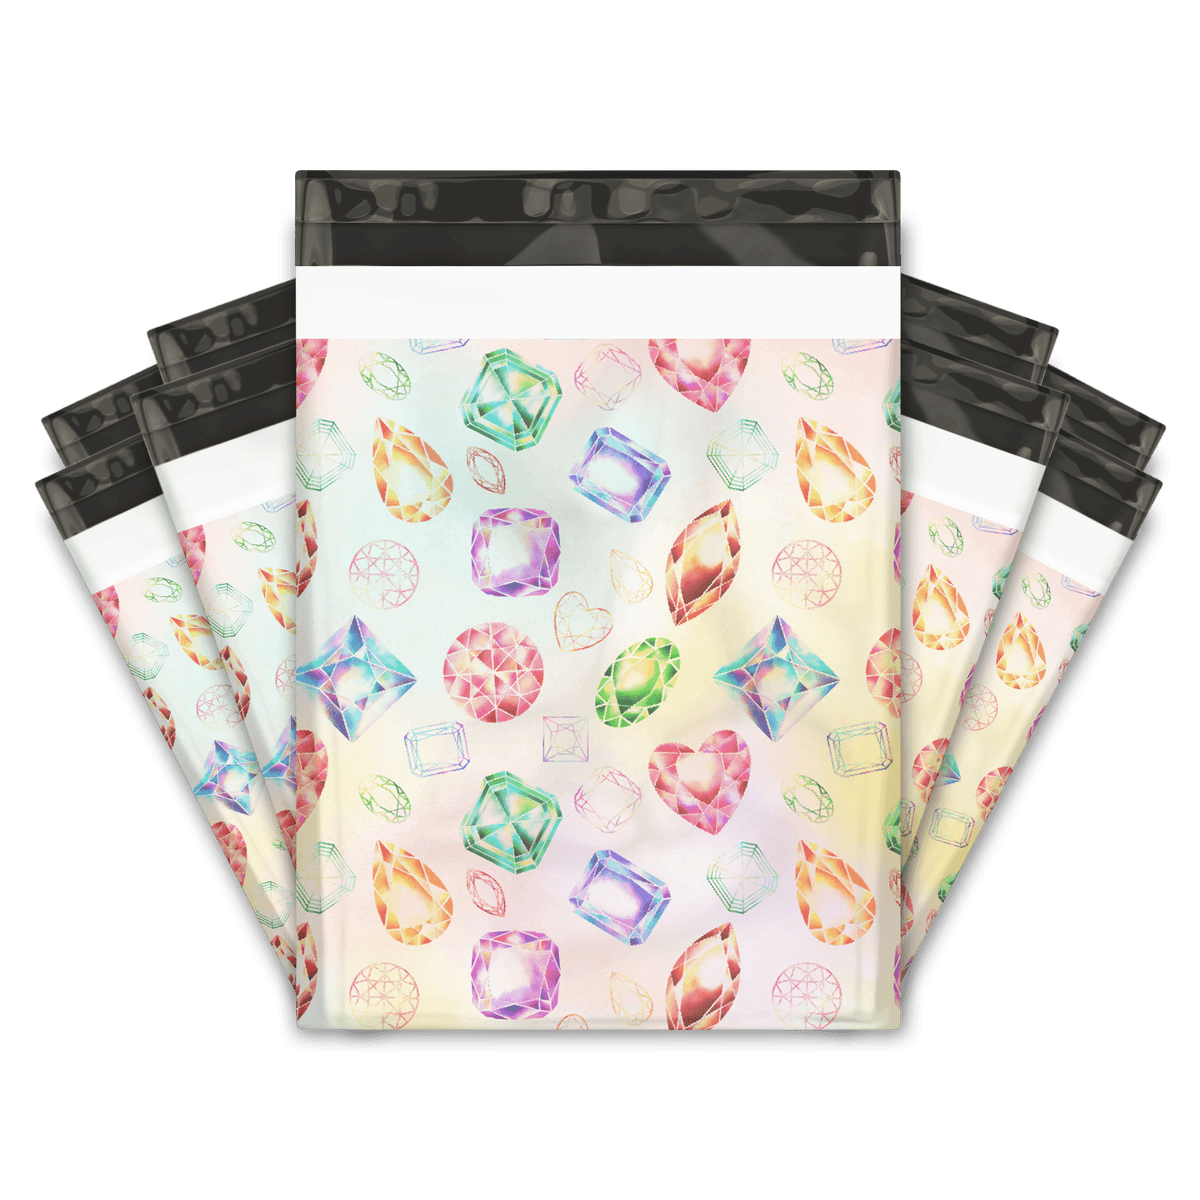  Gems & Diamonds Designer Poly Mailers Shipping Envelopes Premium Printed Bags